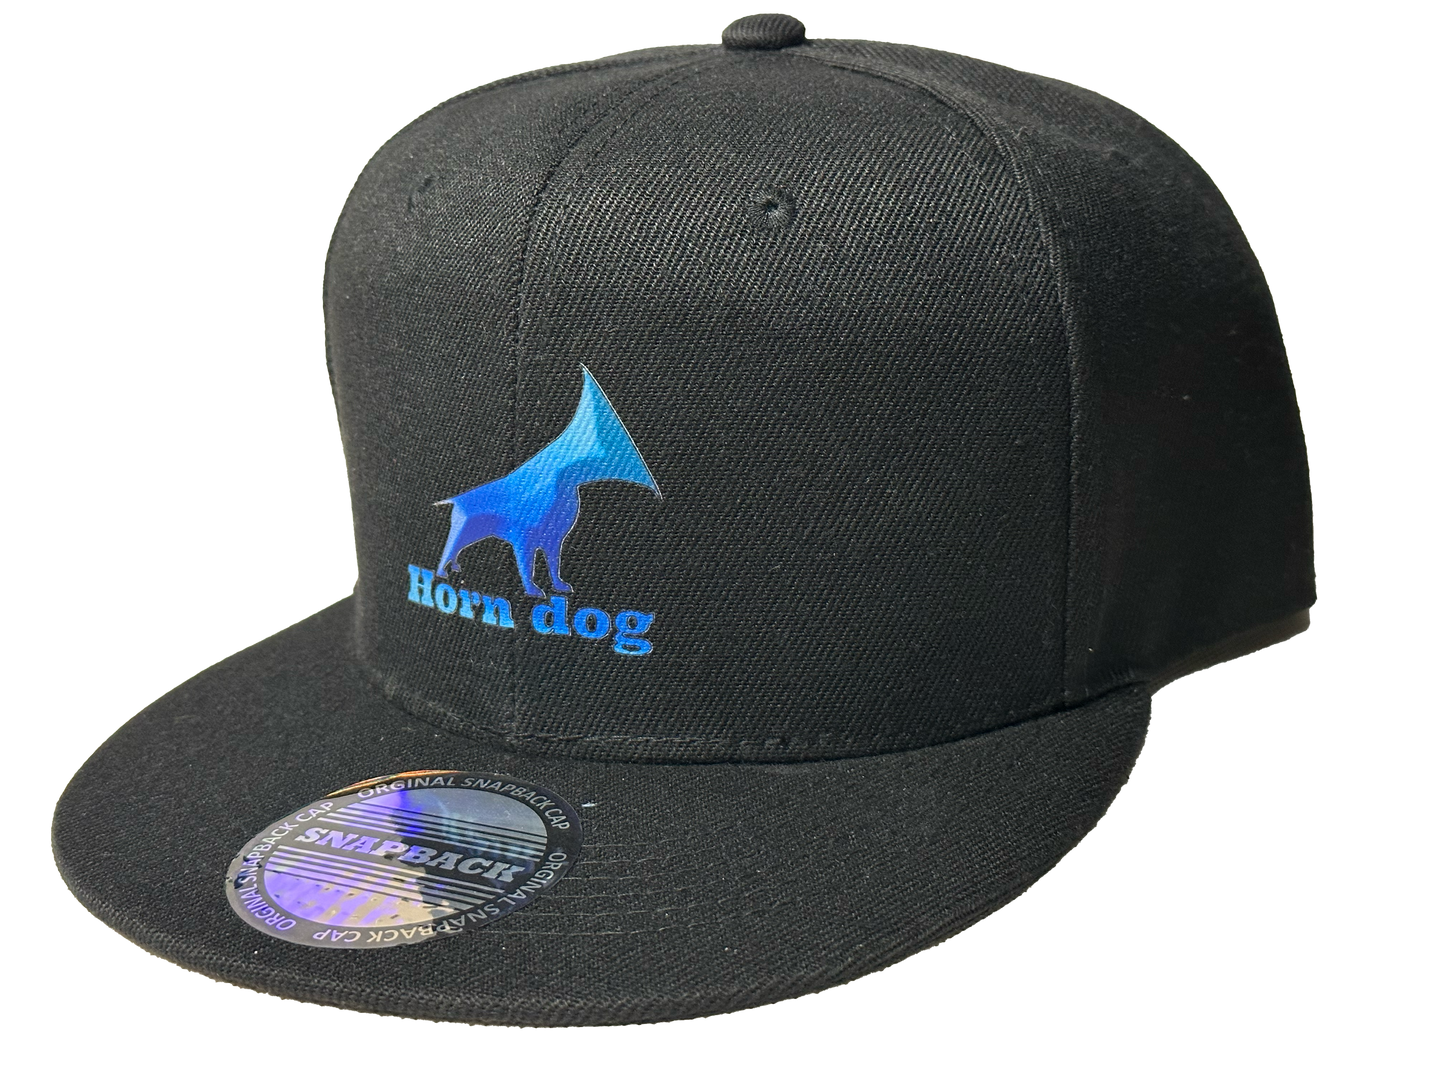 Horn Dog - Flat Brim Trucker Hat